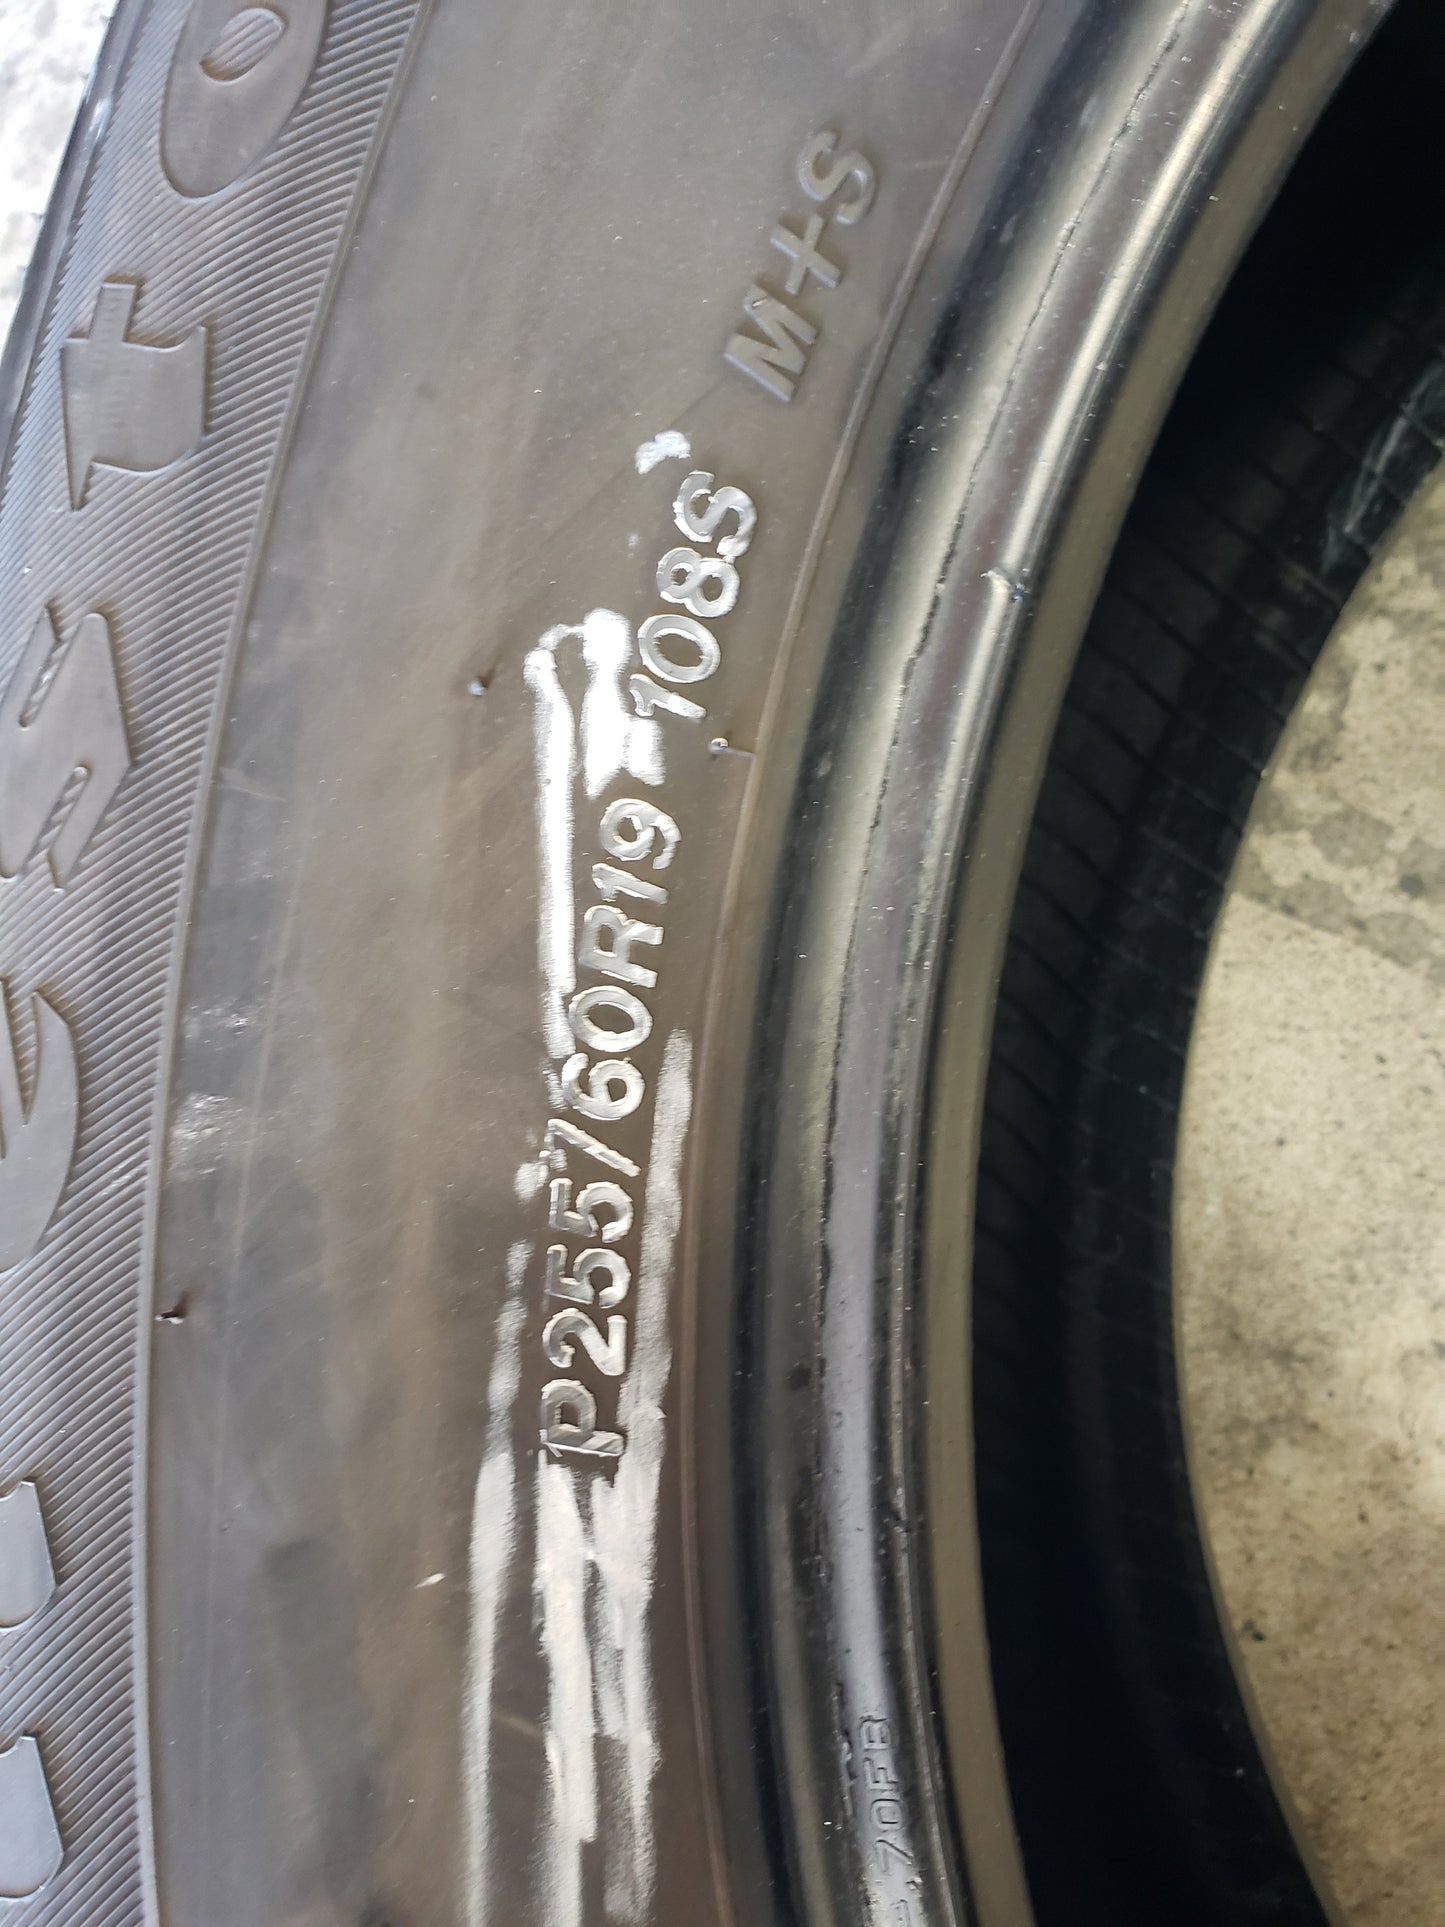 SINGLE 255/50R19 Firestone All Season 108 S SL - Premium Used Tires